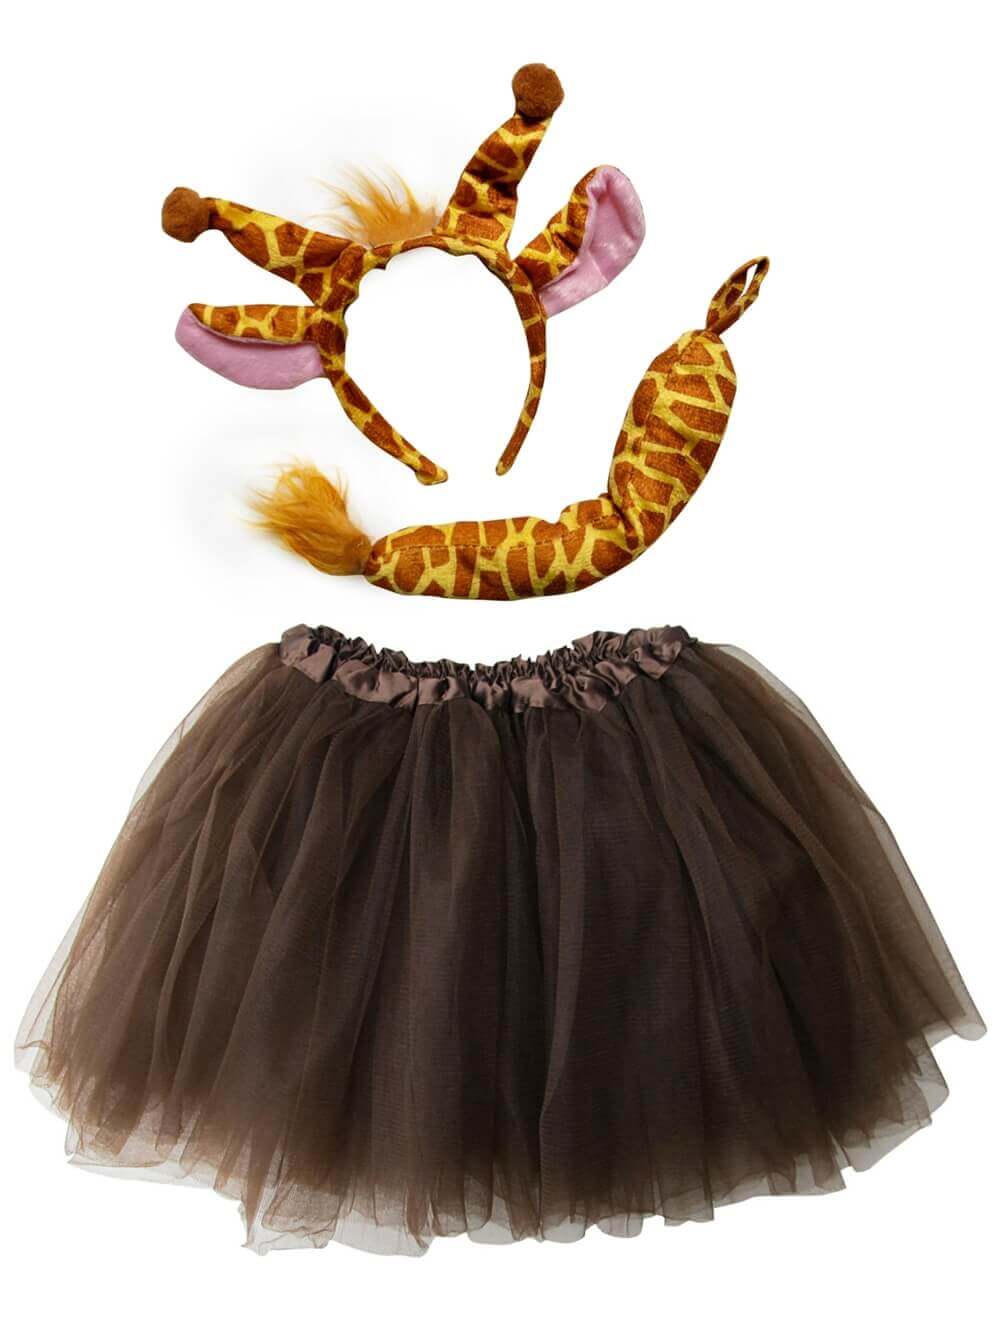 Adult Giraffe Costume - Brown Tutu Skirt, Tail, & Headband Set for Adult or Plus Size - Sydney So Sweet